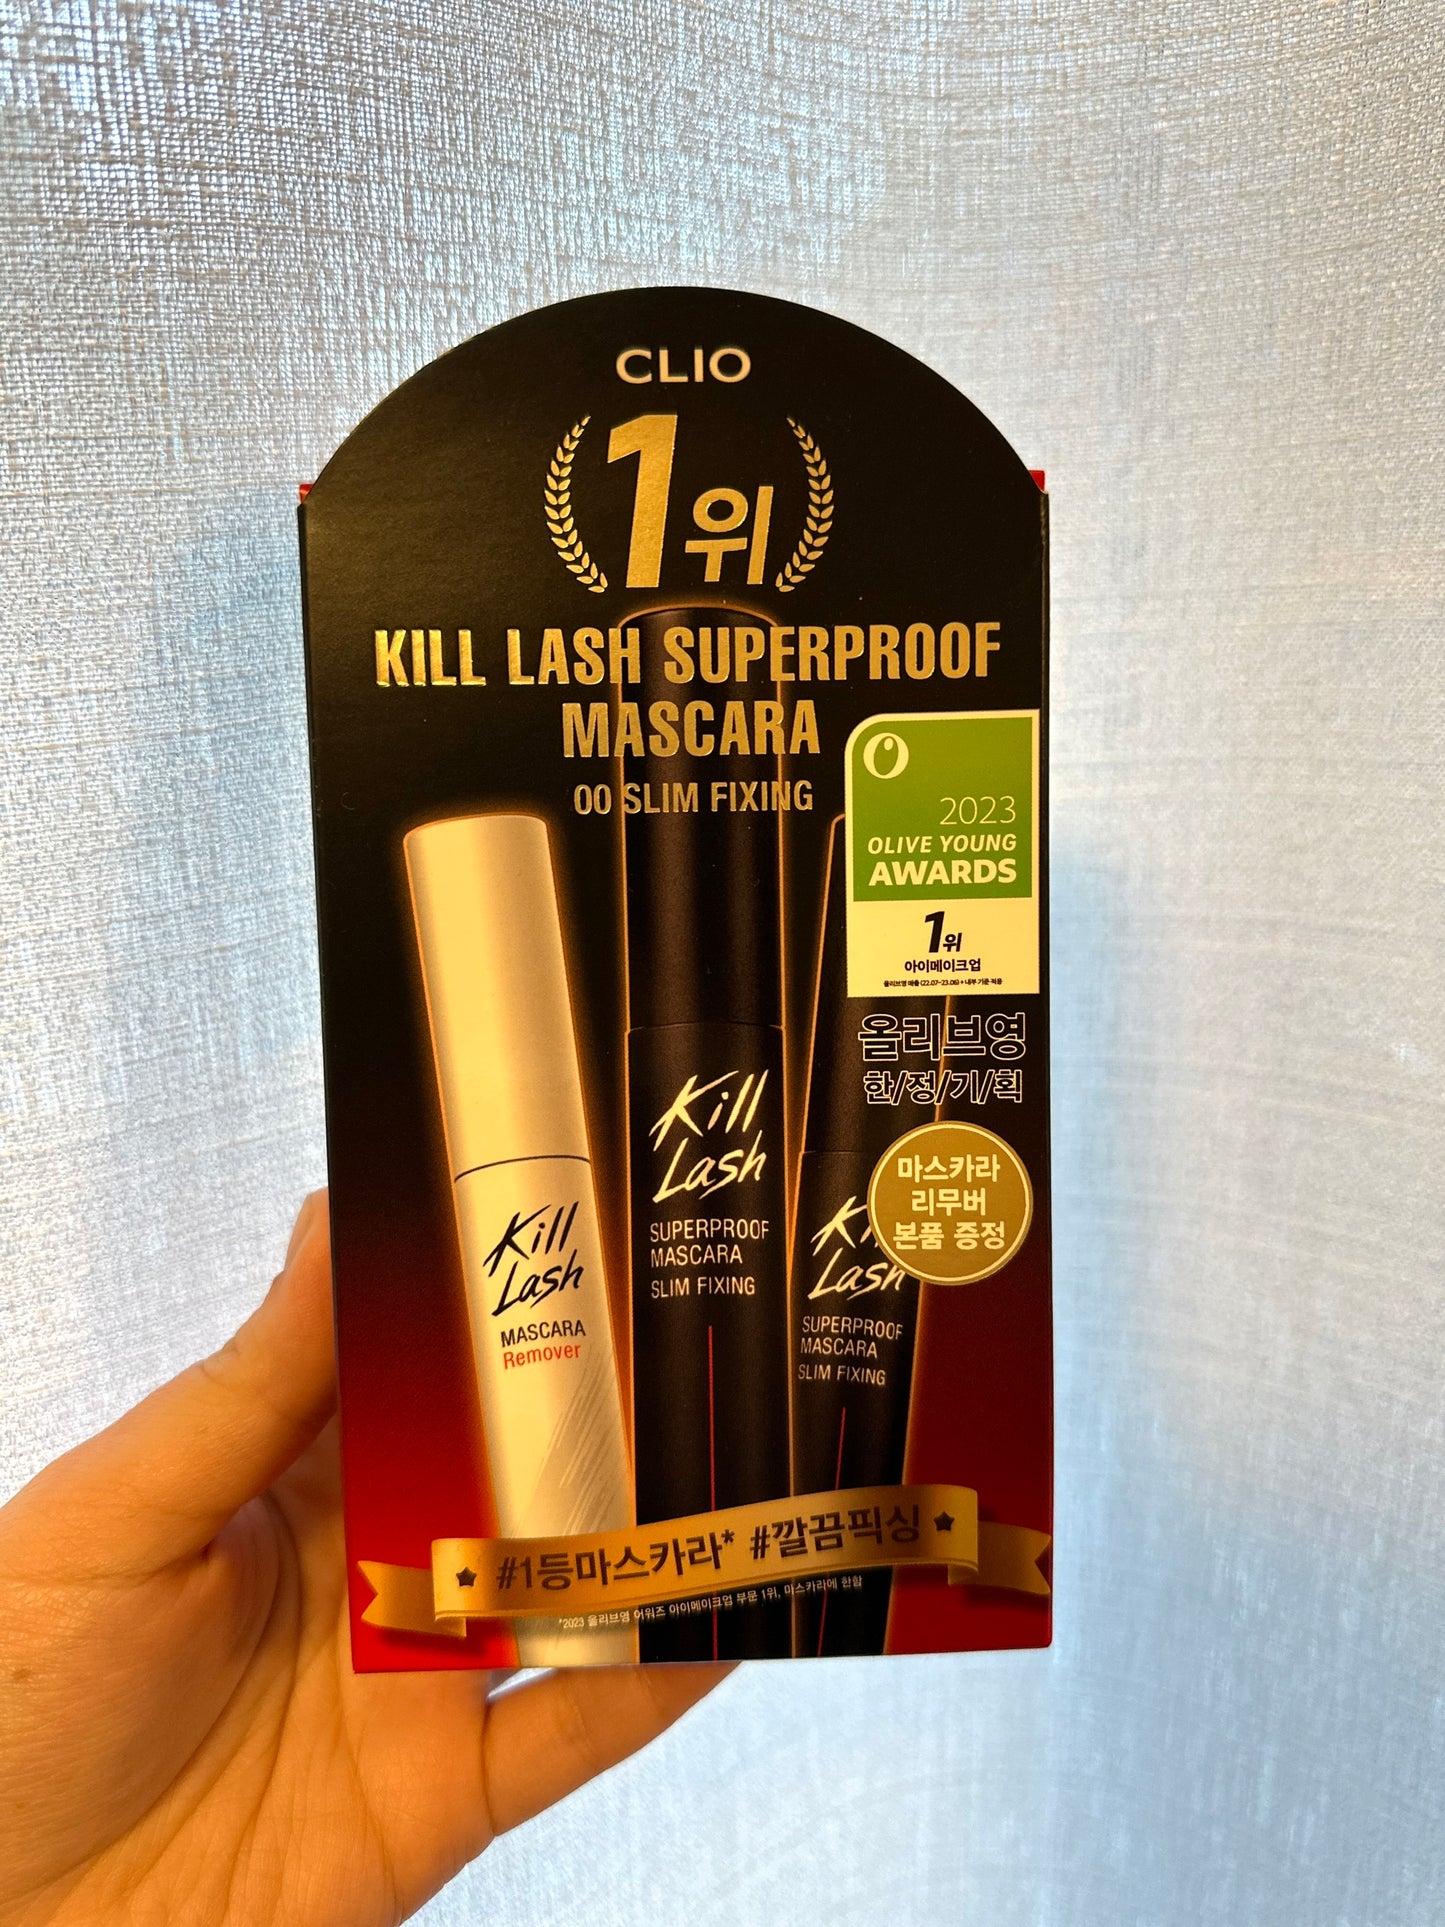 [Promotion] CLIO Kill Lash Mascara Special Set (1+1 Set)